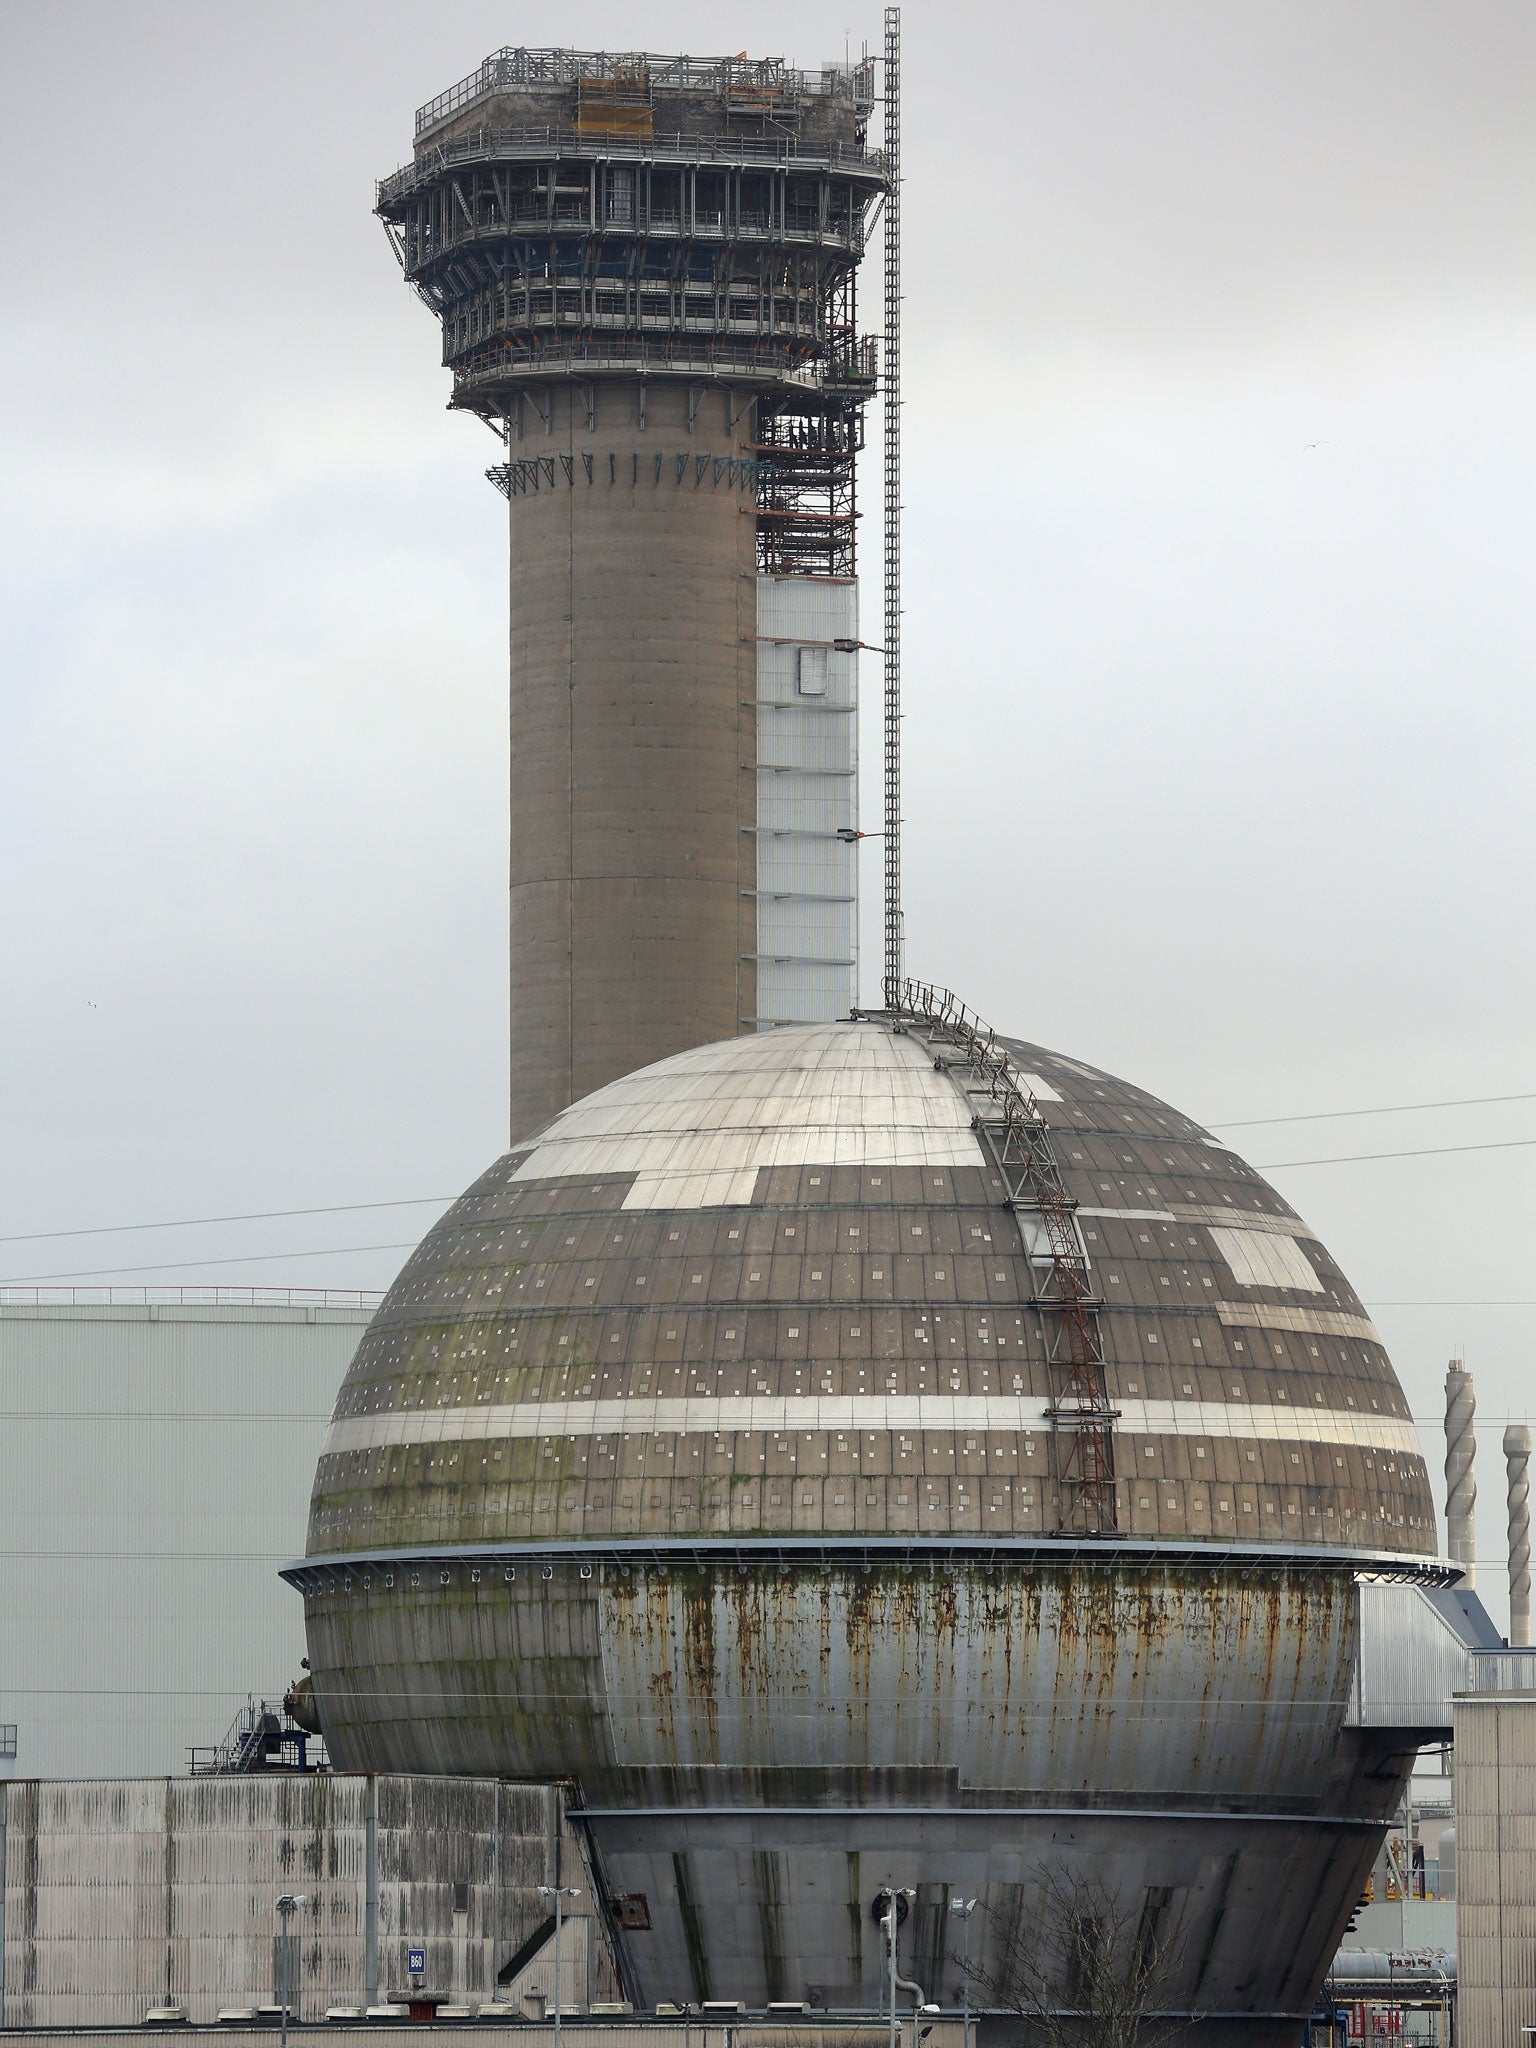 Sellafield nuclear plant in Seascale, Cumbria